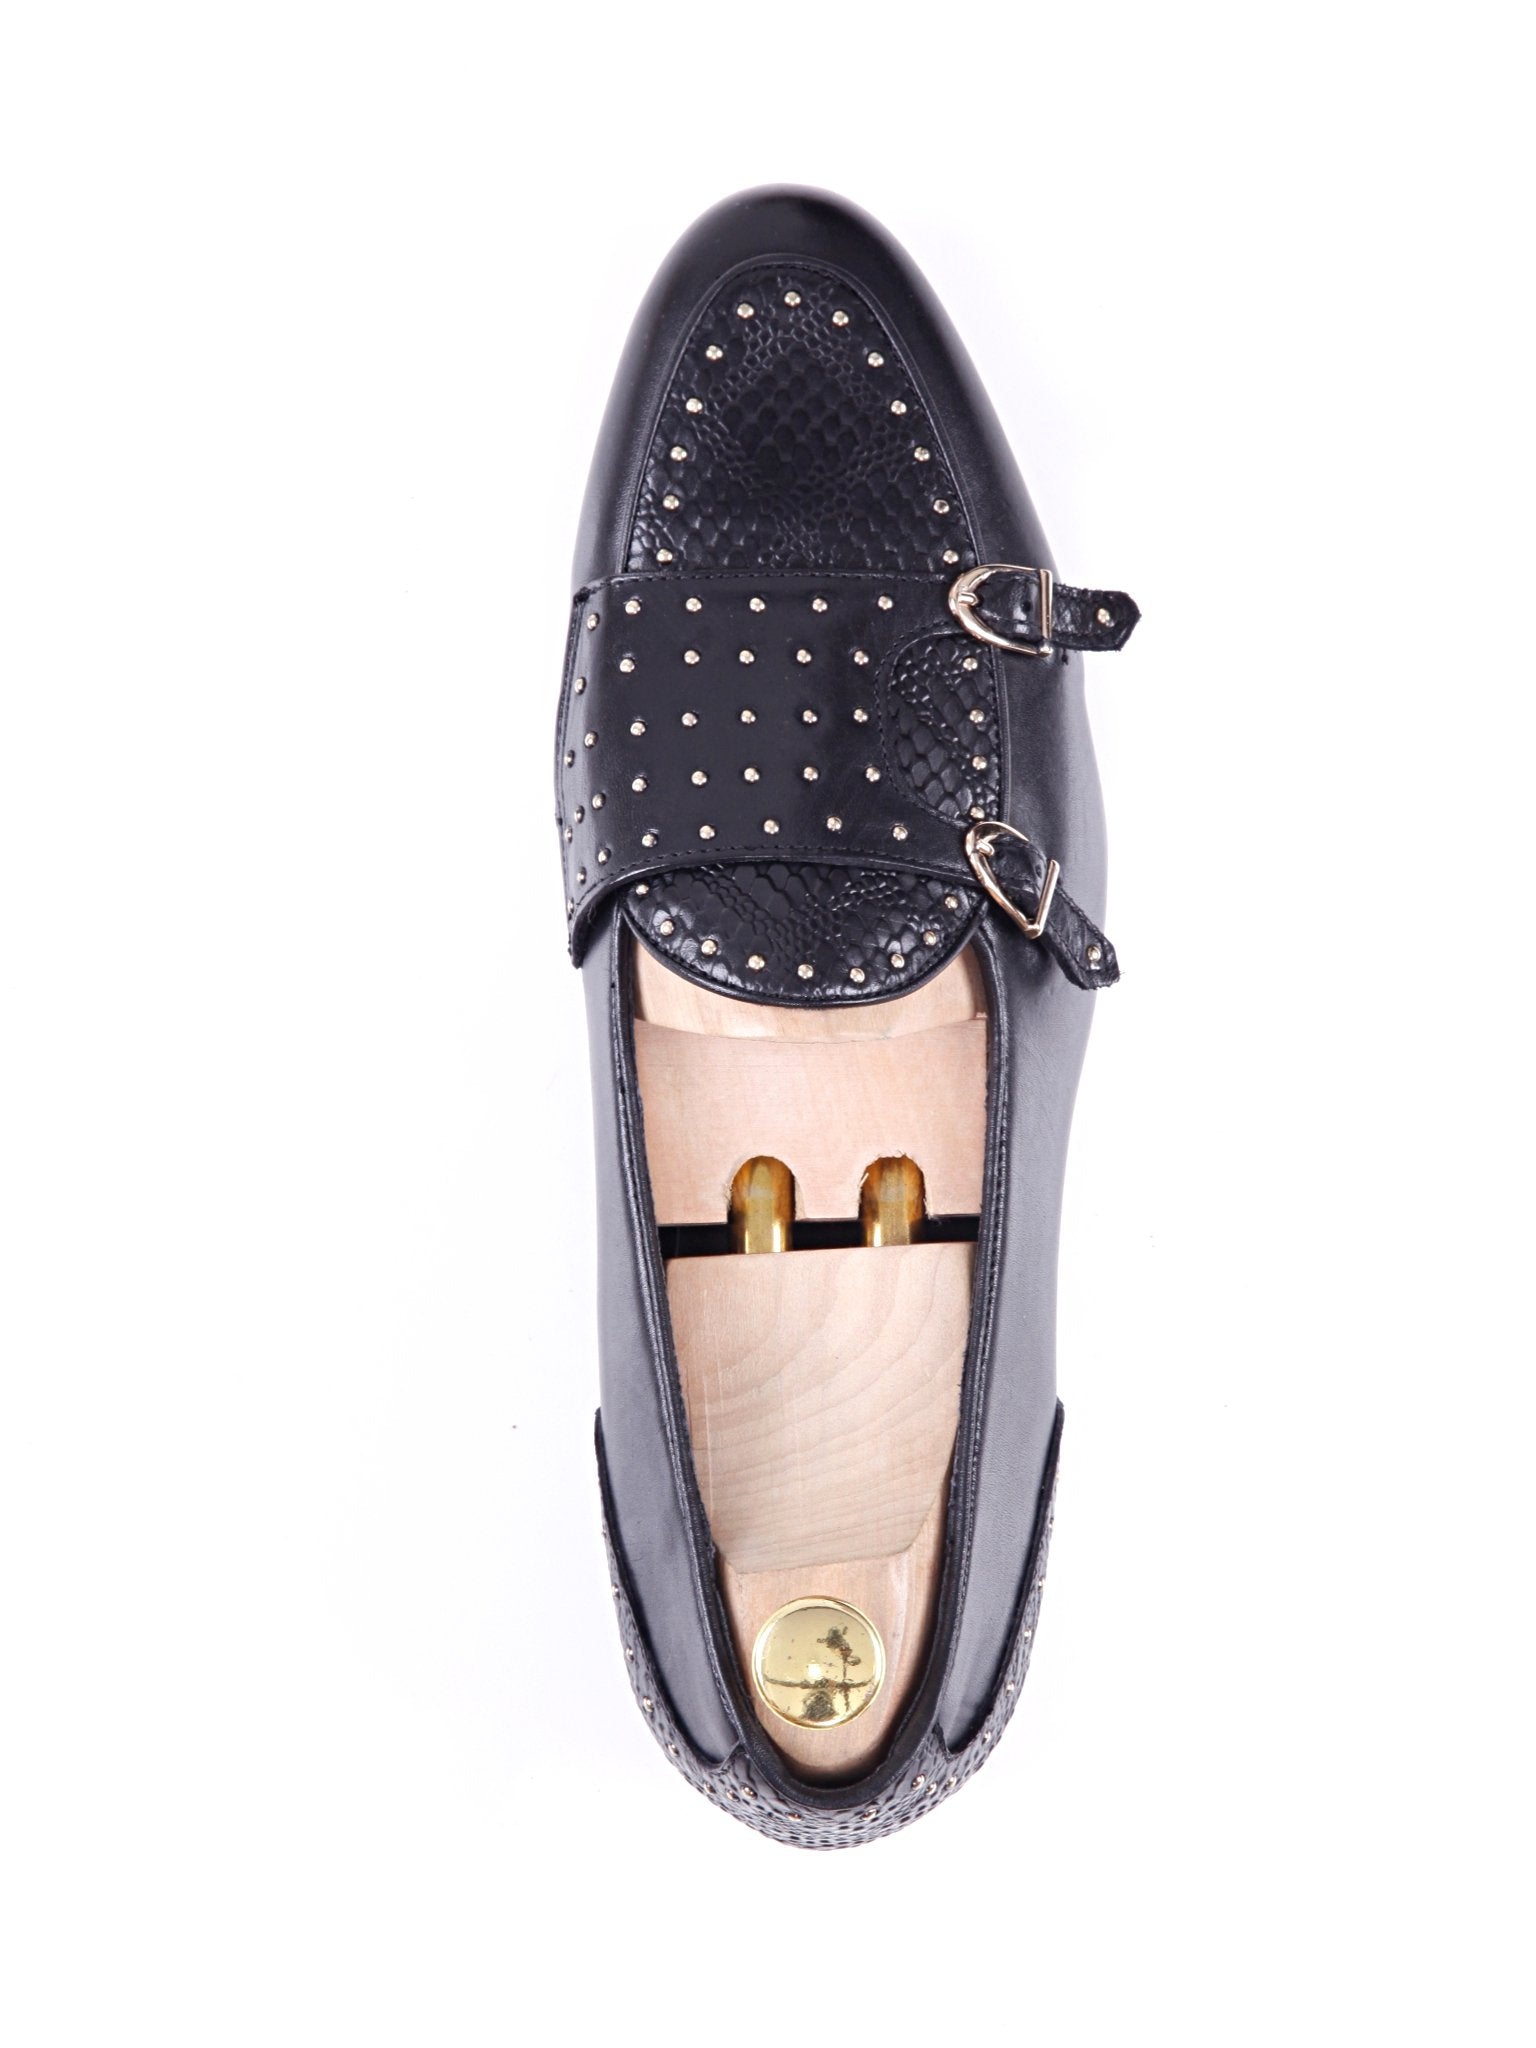 Belgian Loafer - Black Snake Skin Double Monk Strap with Studded - Zeve Shoes